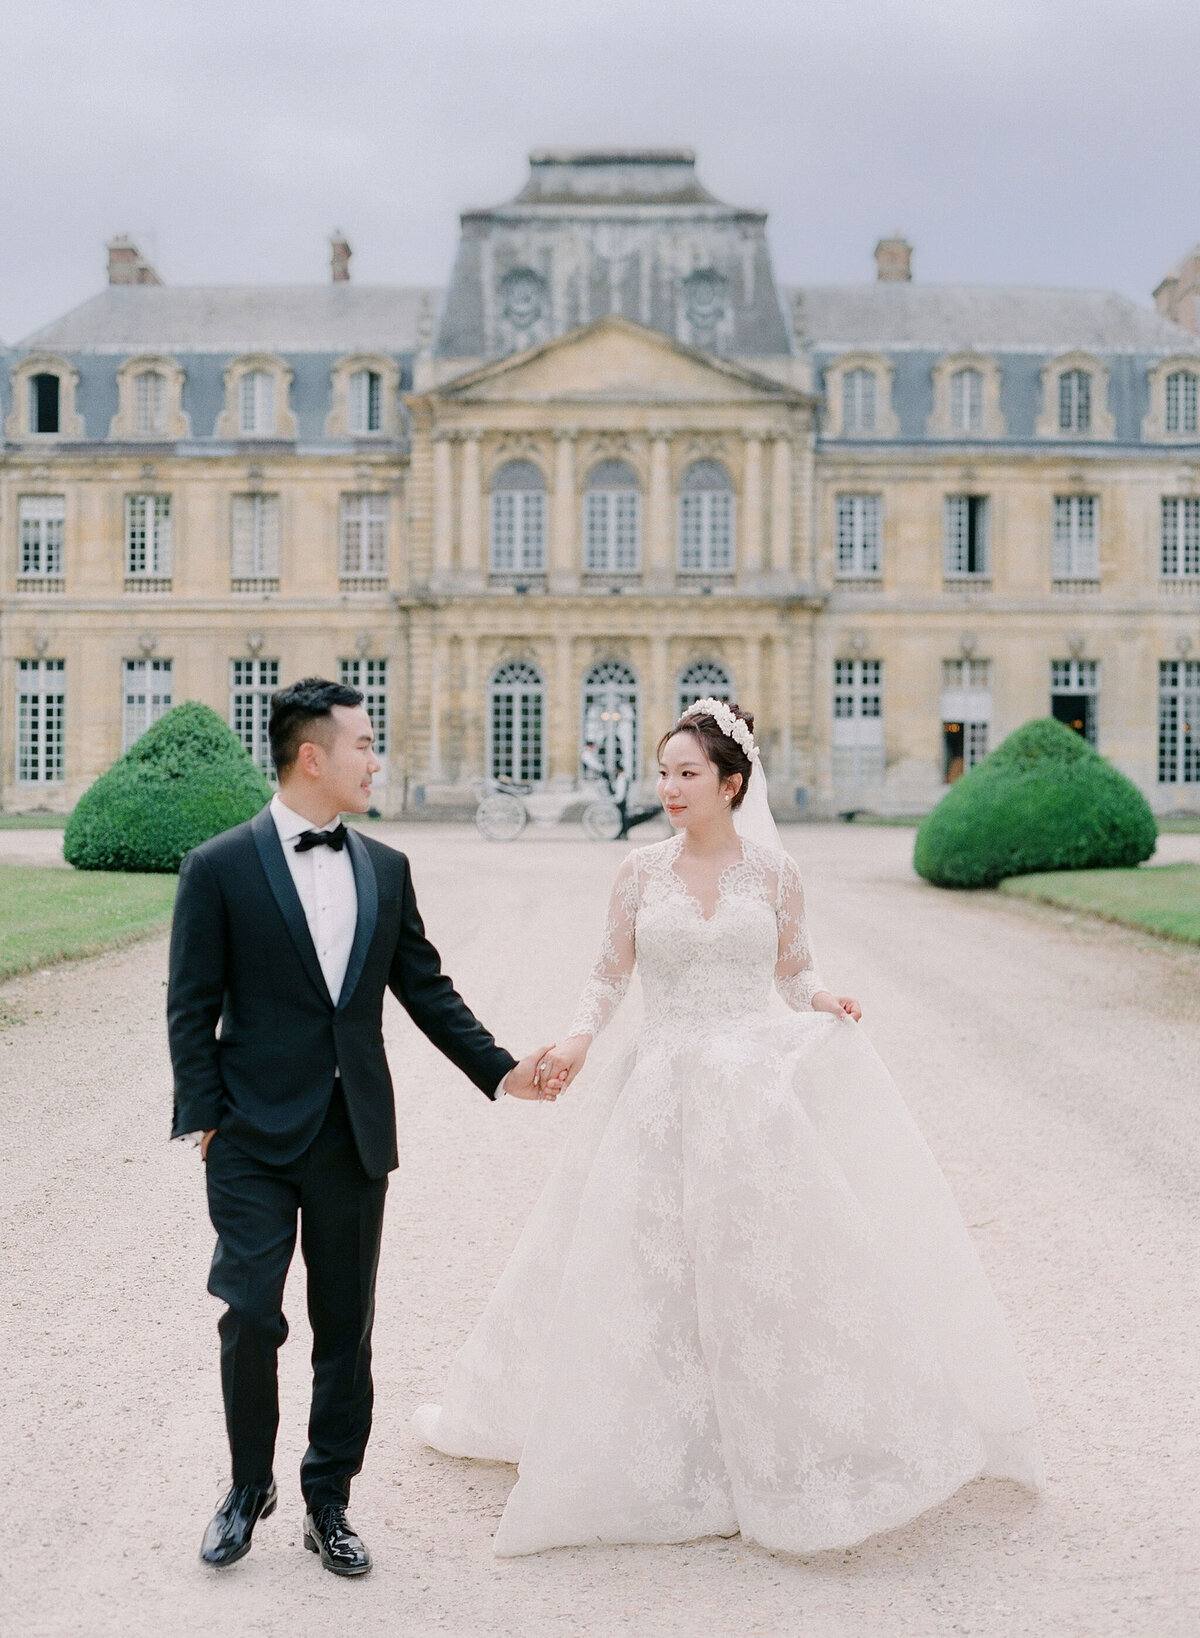 Bride and groom at a chateau wedding near Paris, France